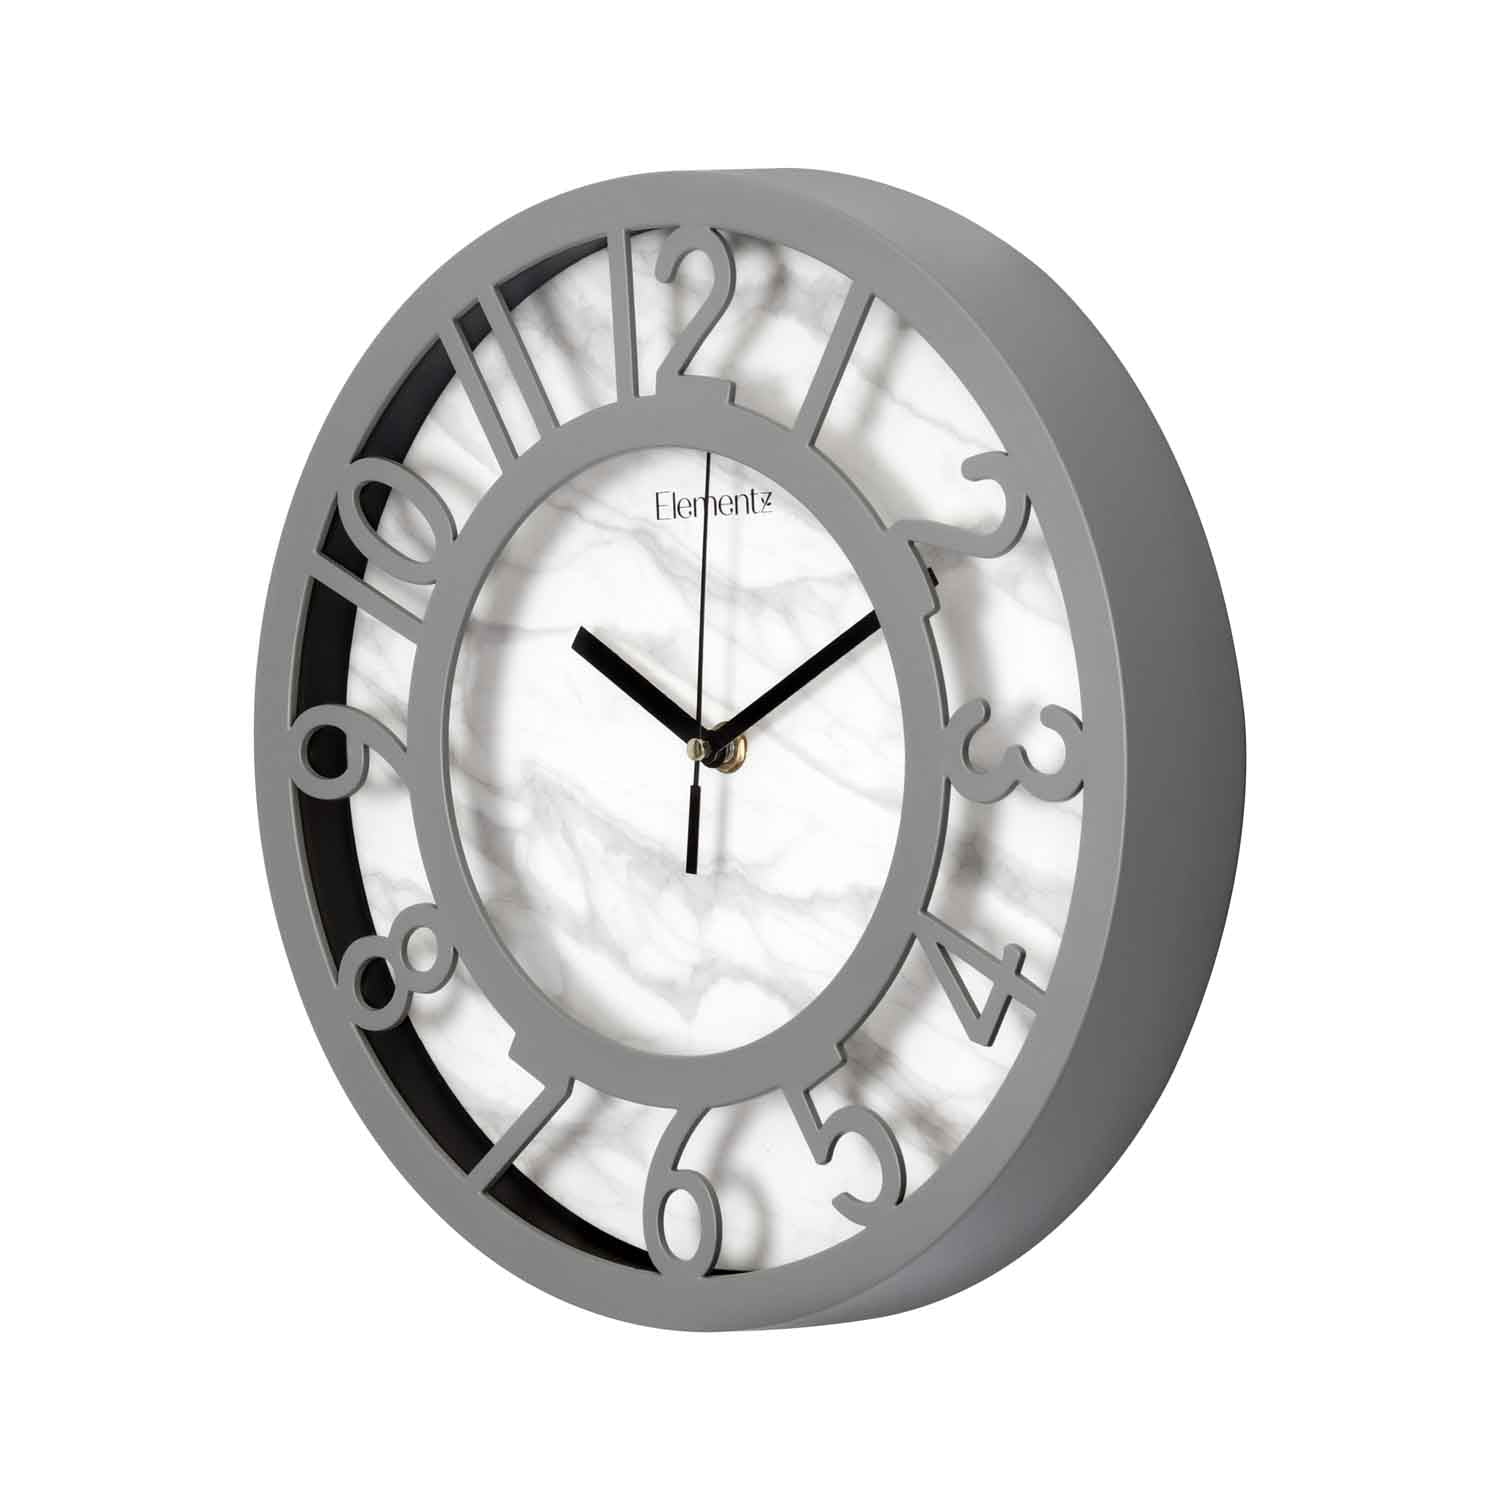 Marbelo Fig Analog Wall Clock Grey & White